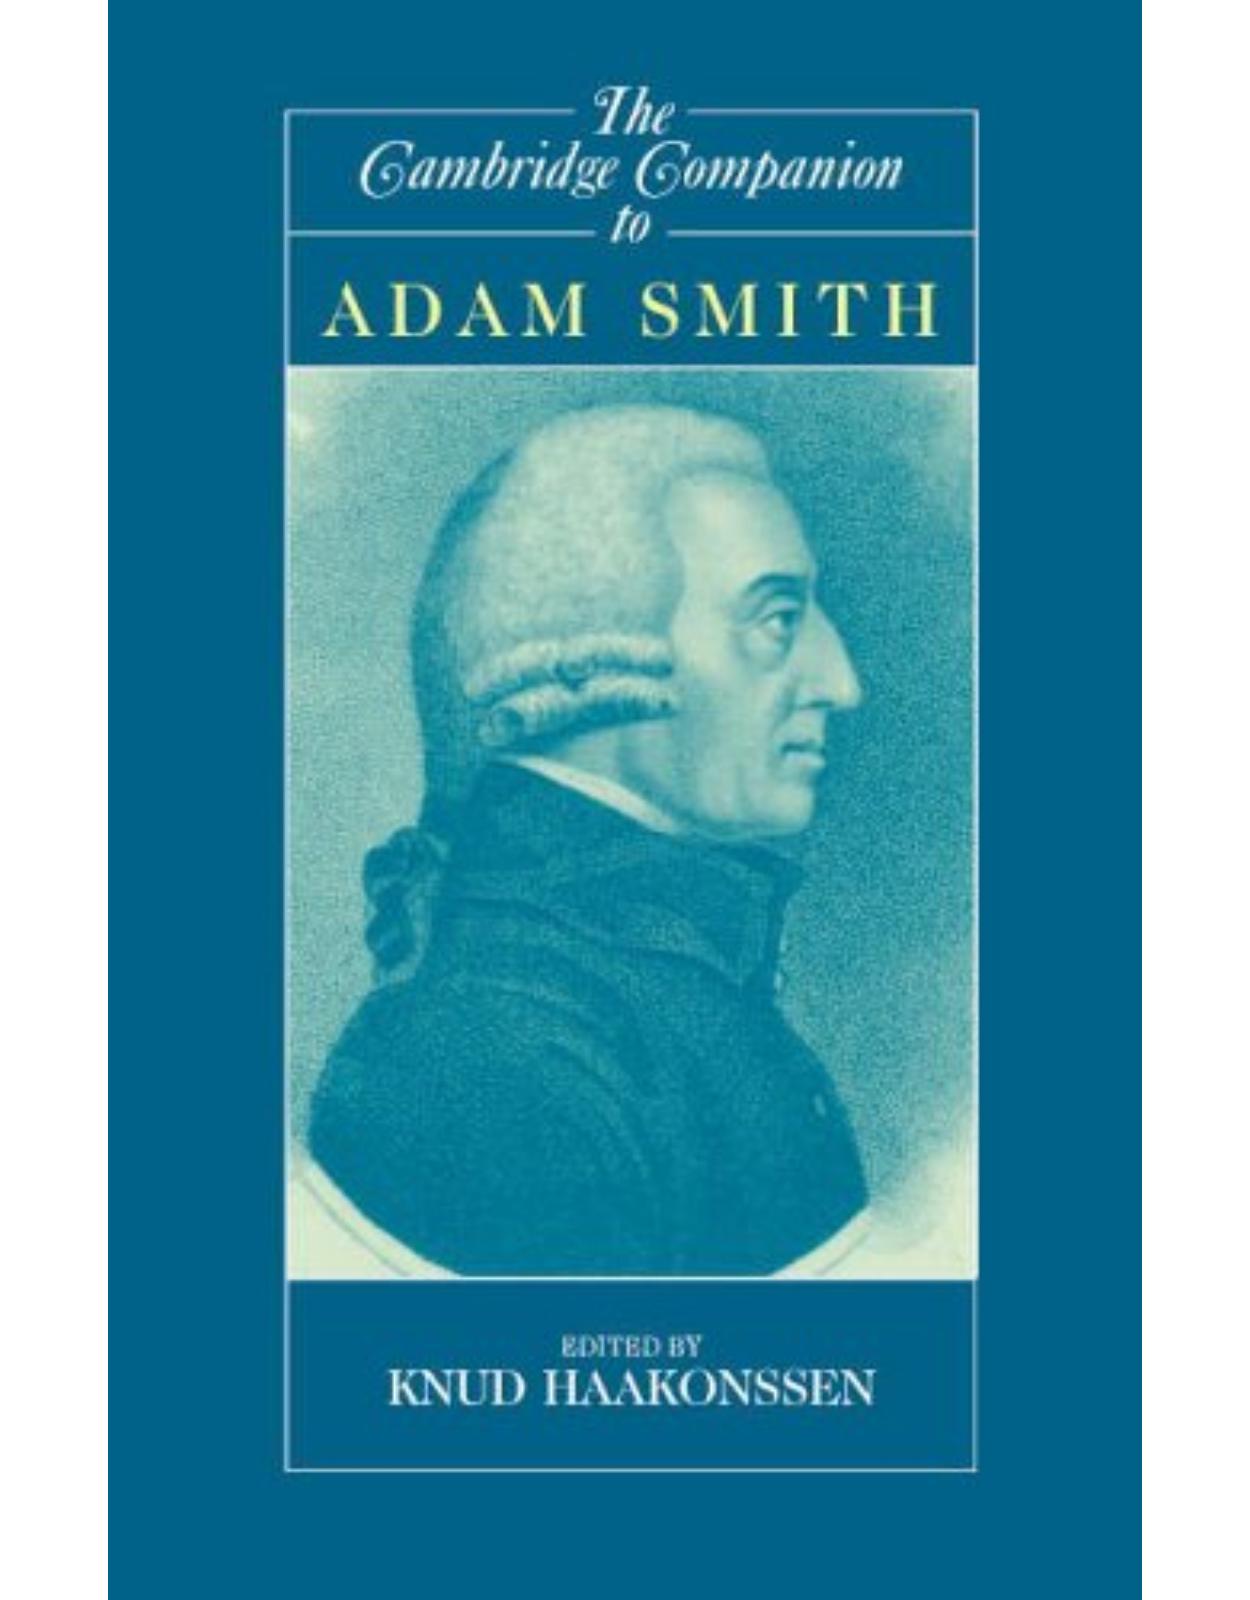 The Cambridge Companion to Adam Smith (Cambridge Companions to Philosophy)